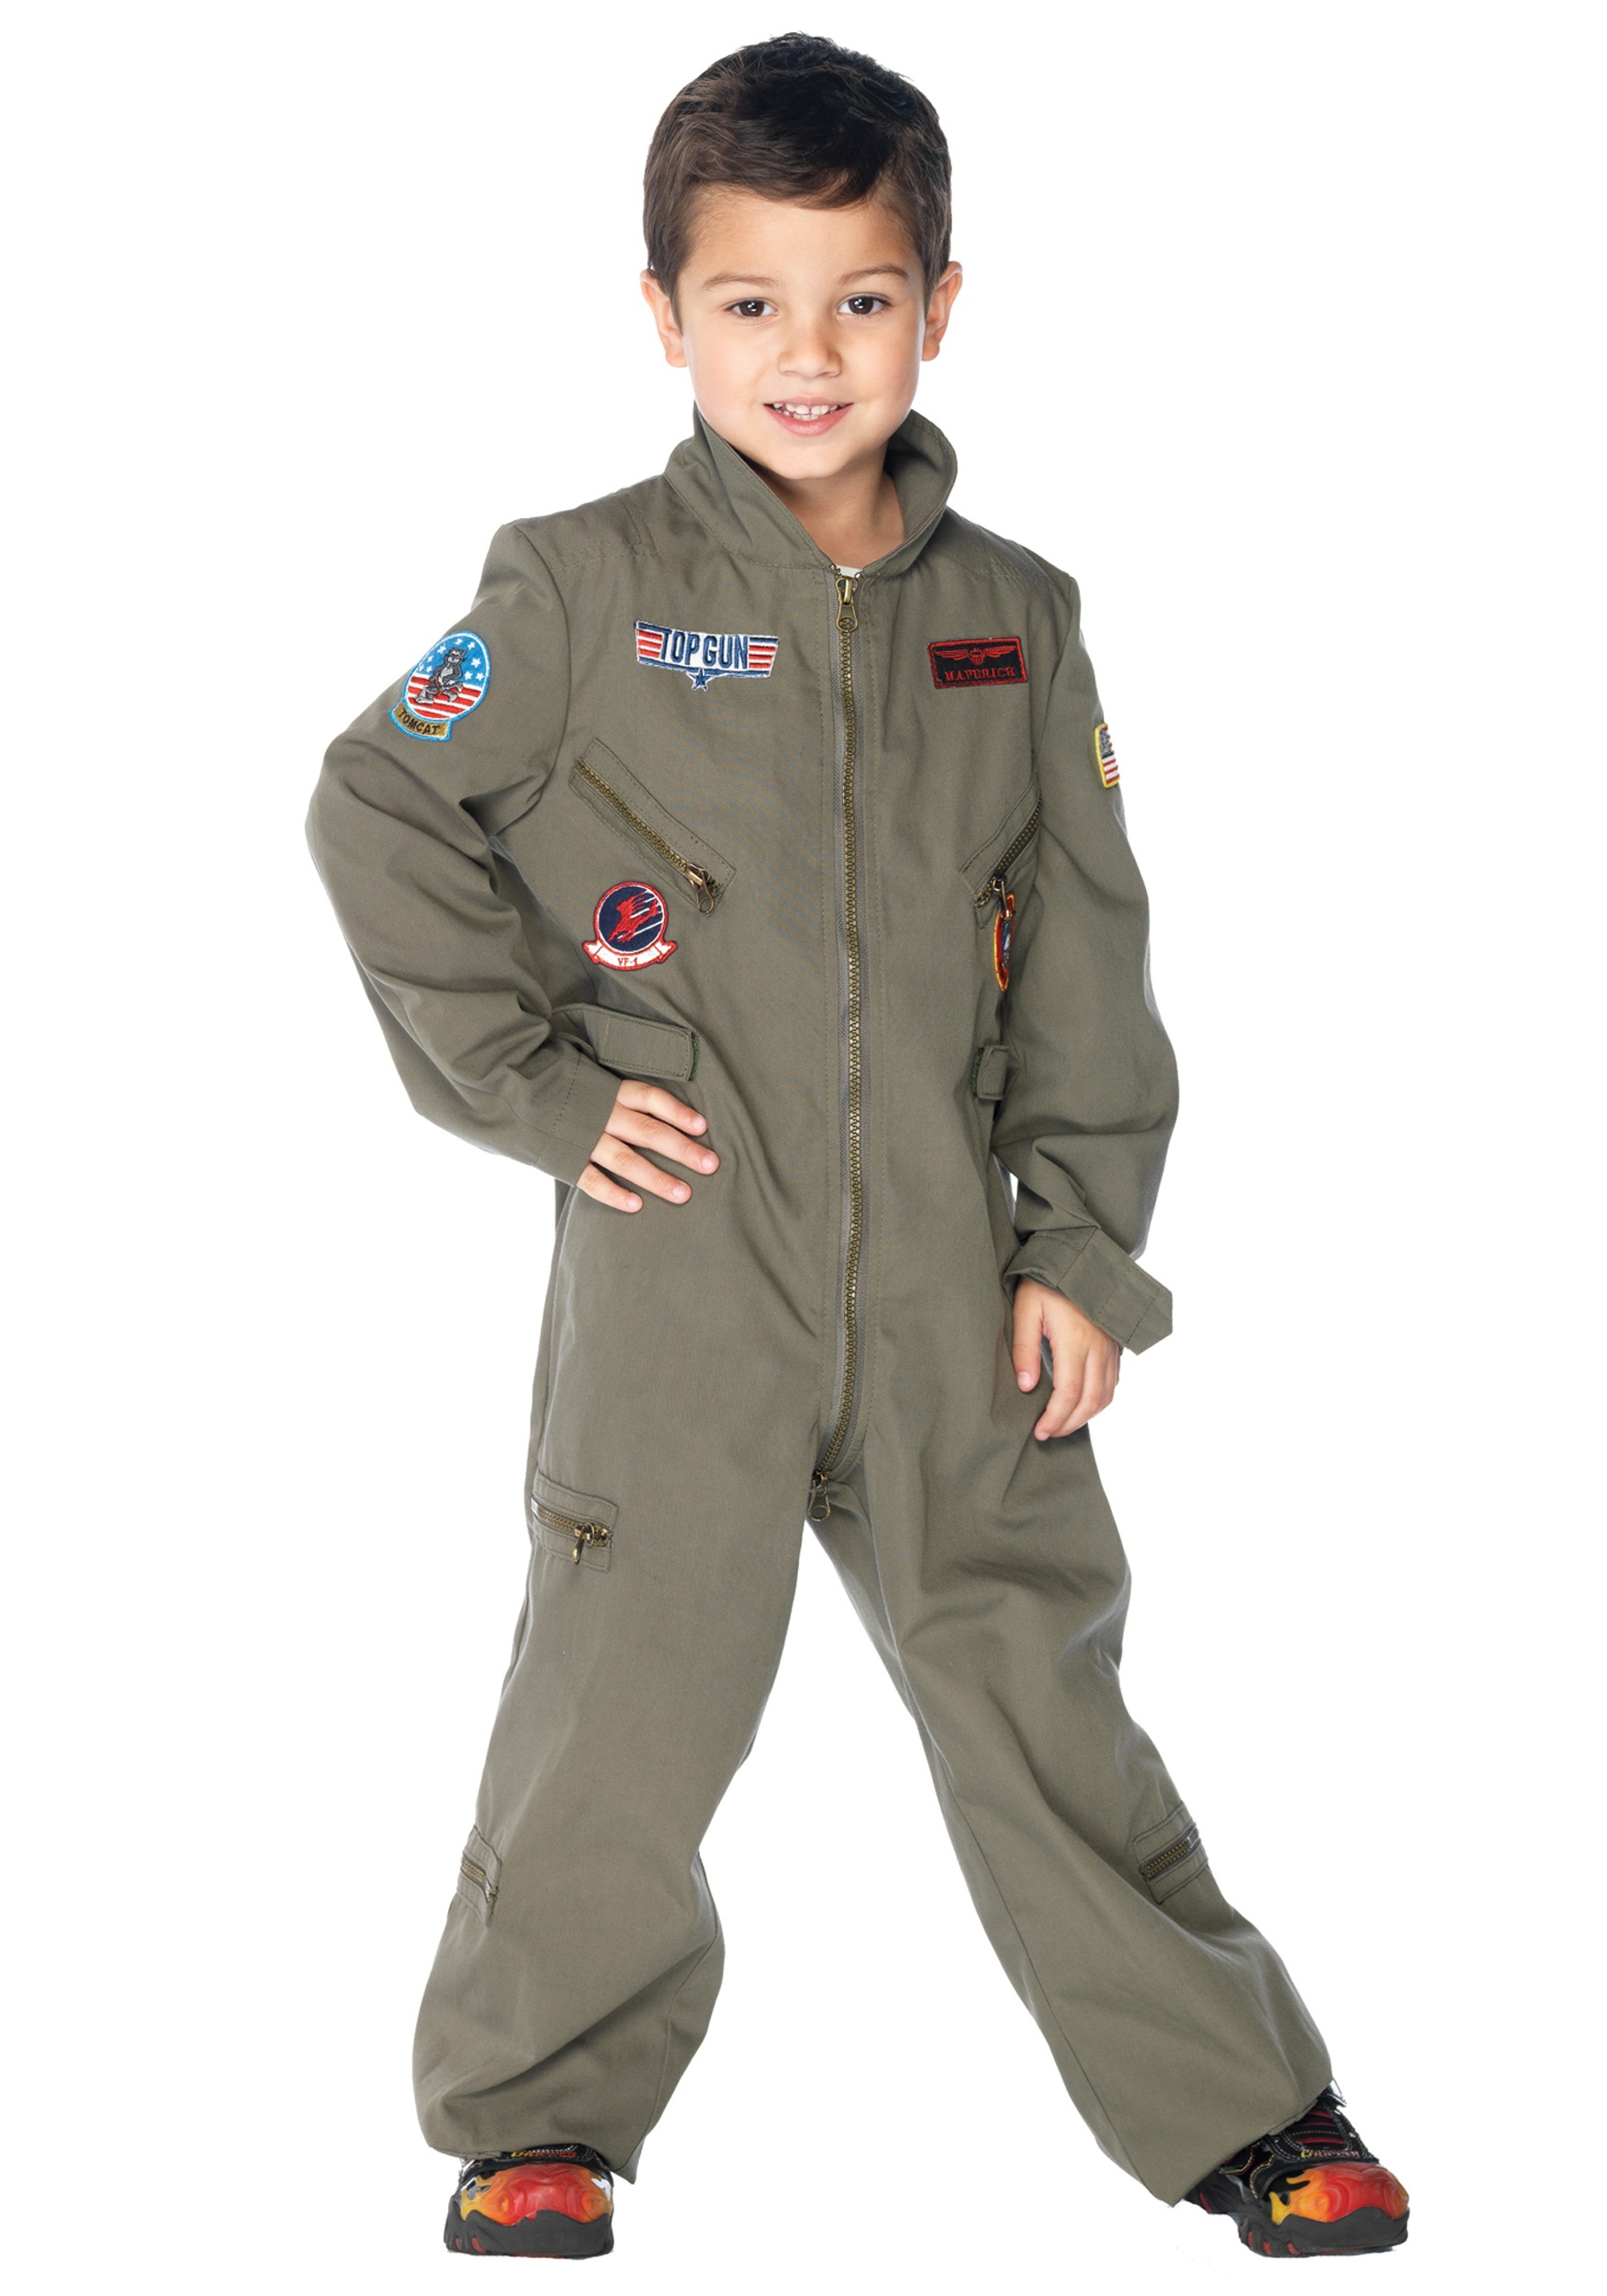 Top Gun Boy's Costume